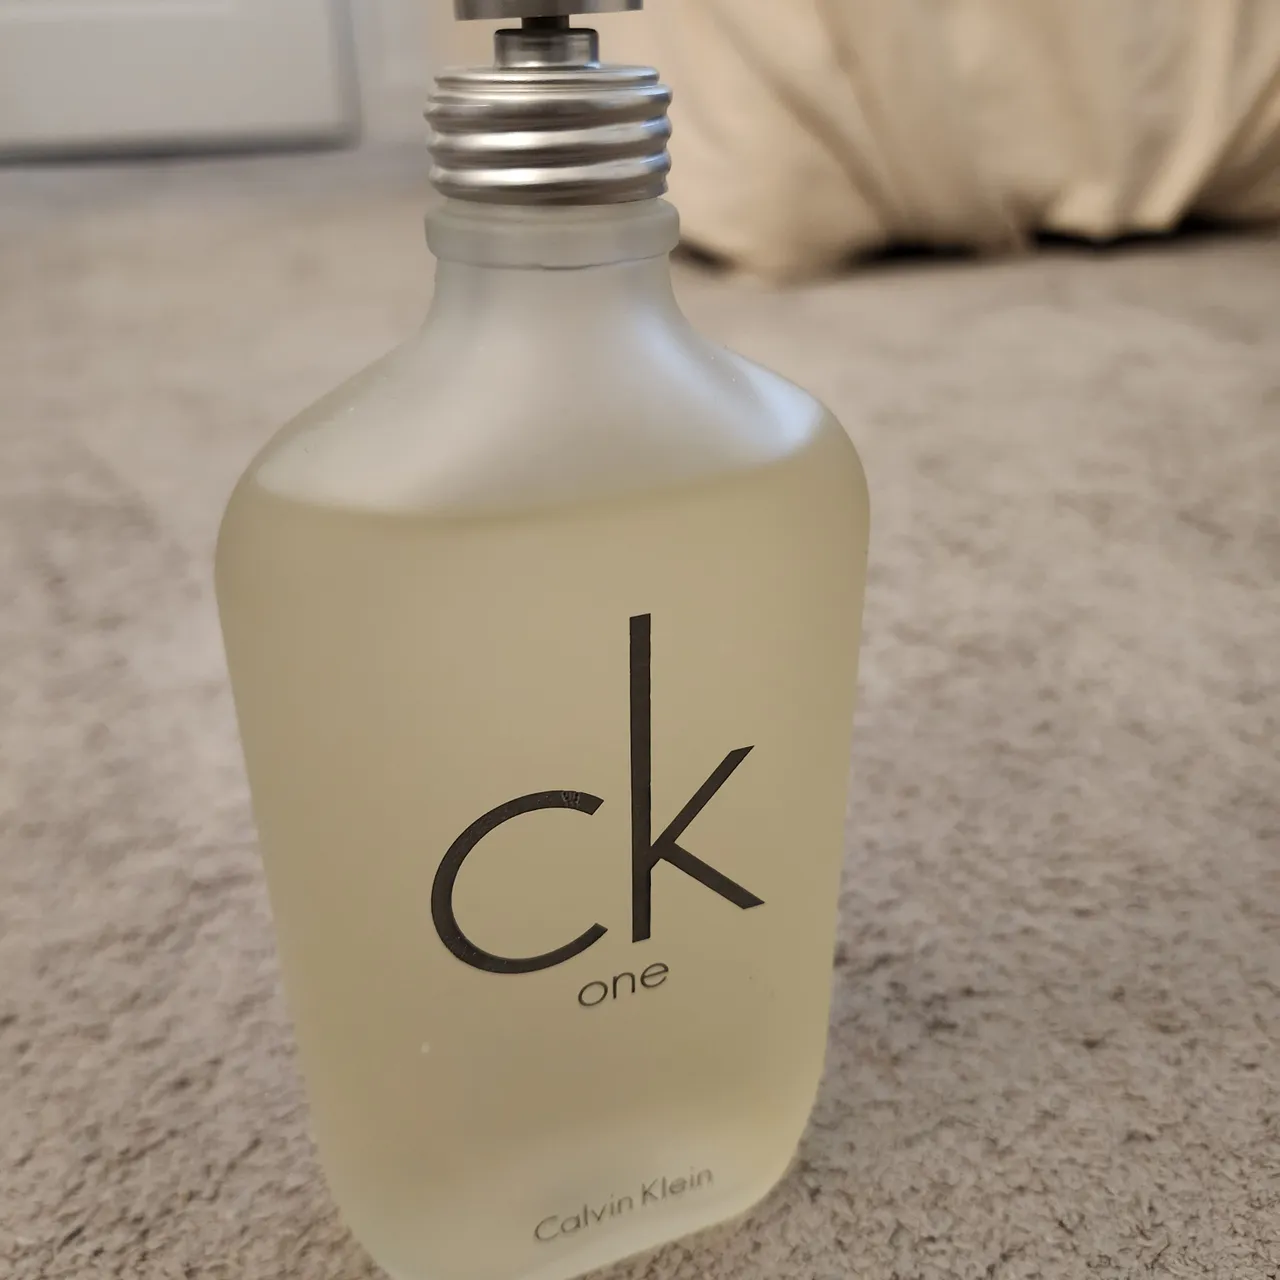 CK one perfume photo 1